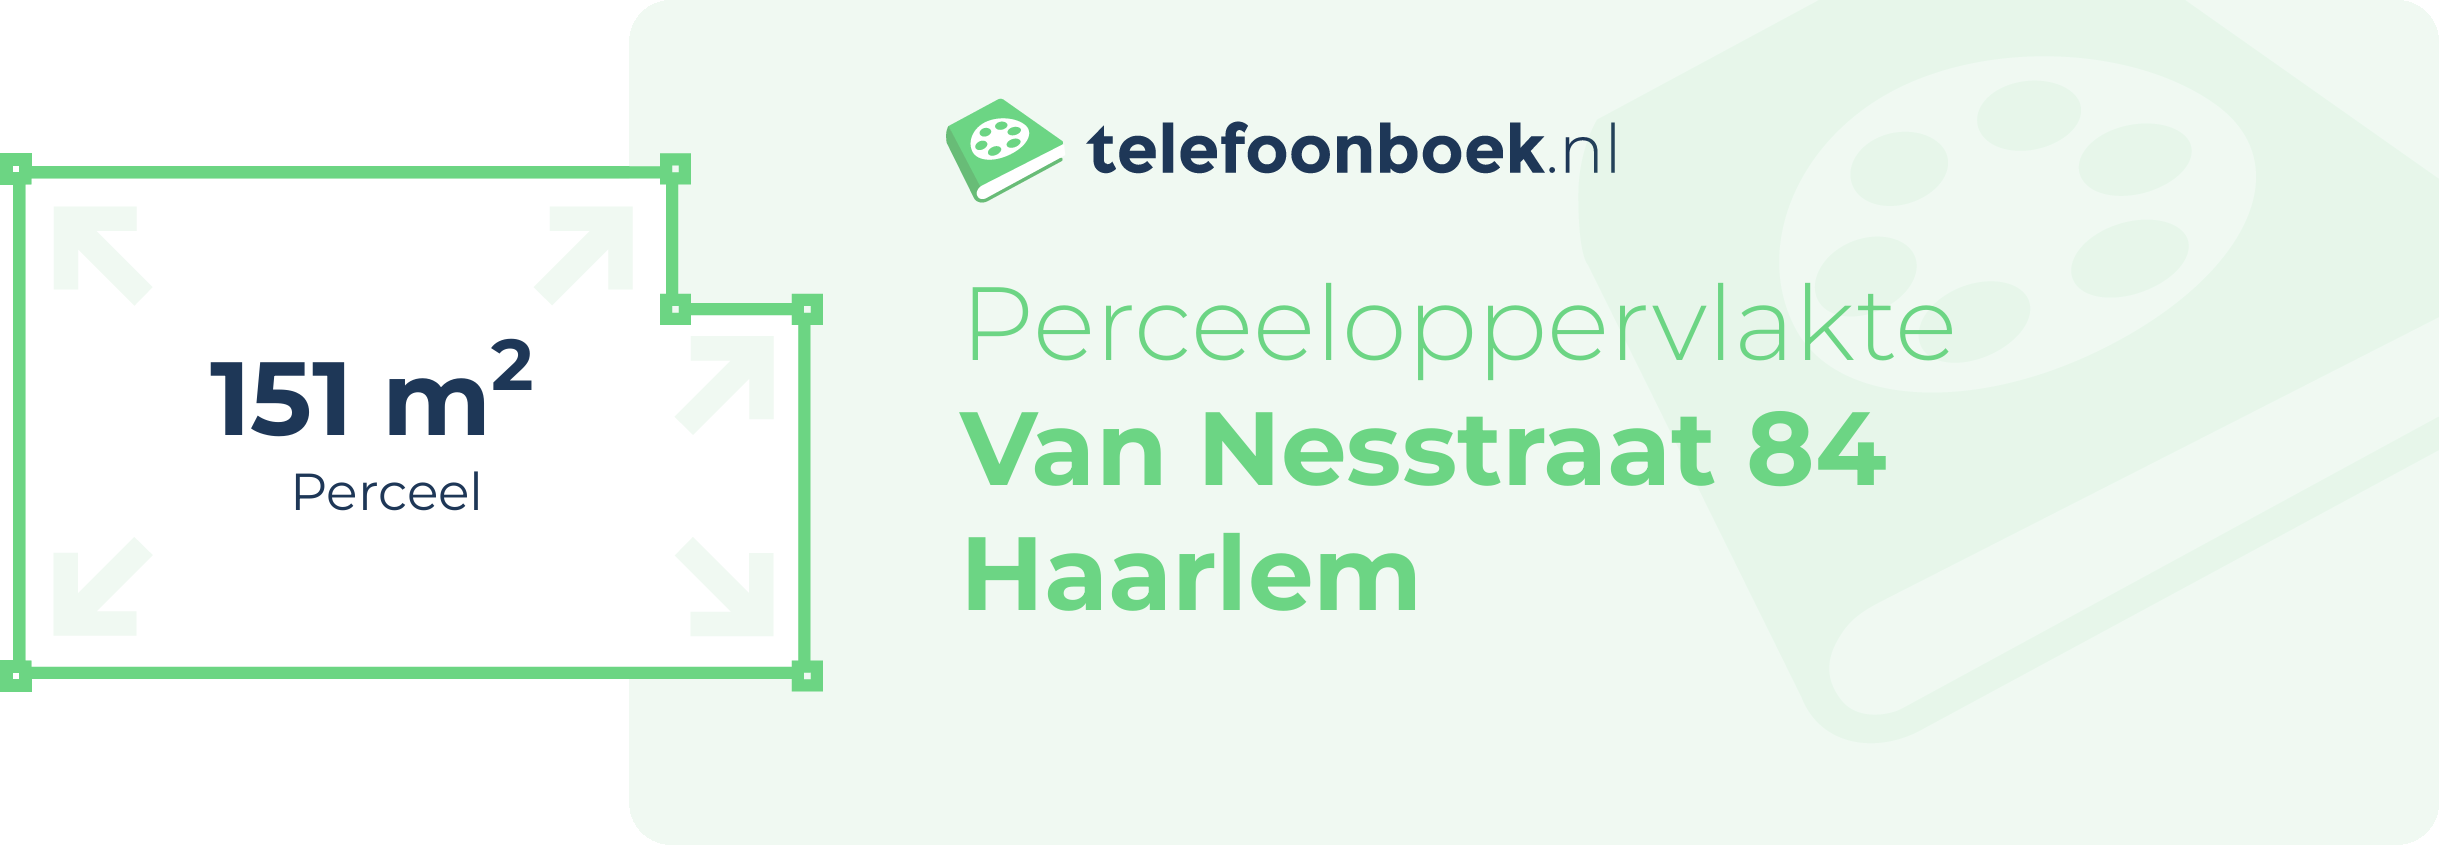 Perceeloppervlakte Van Nesstraat 84 Haarlem